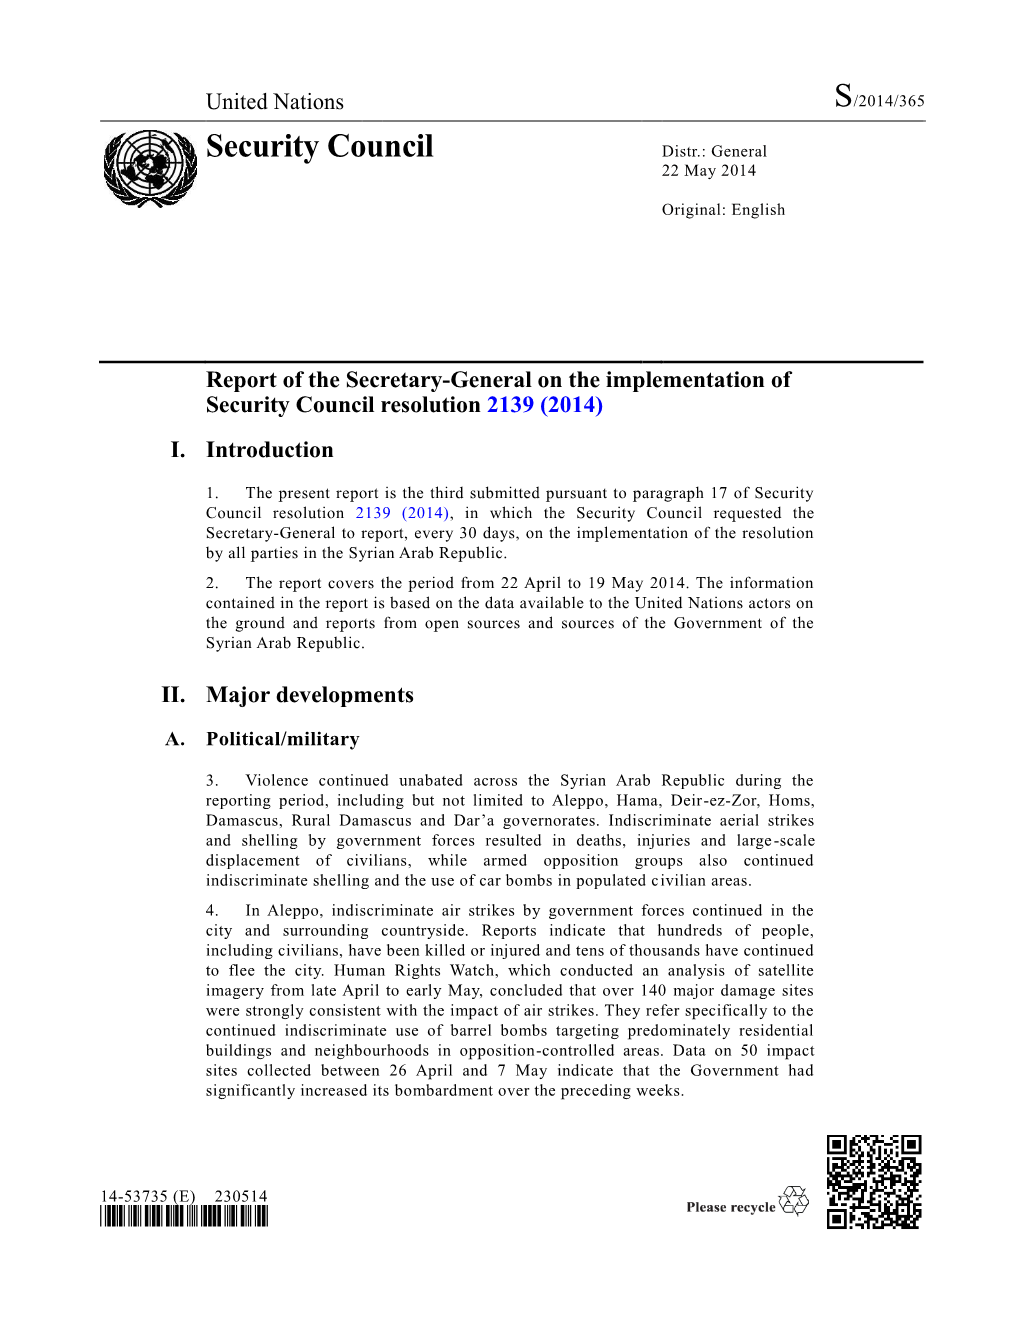 Security Council Distr.: General 22 May 2014